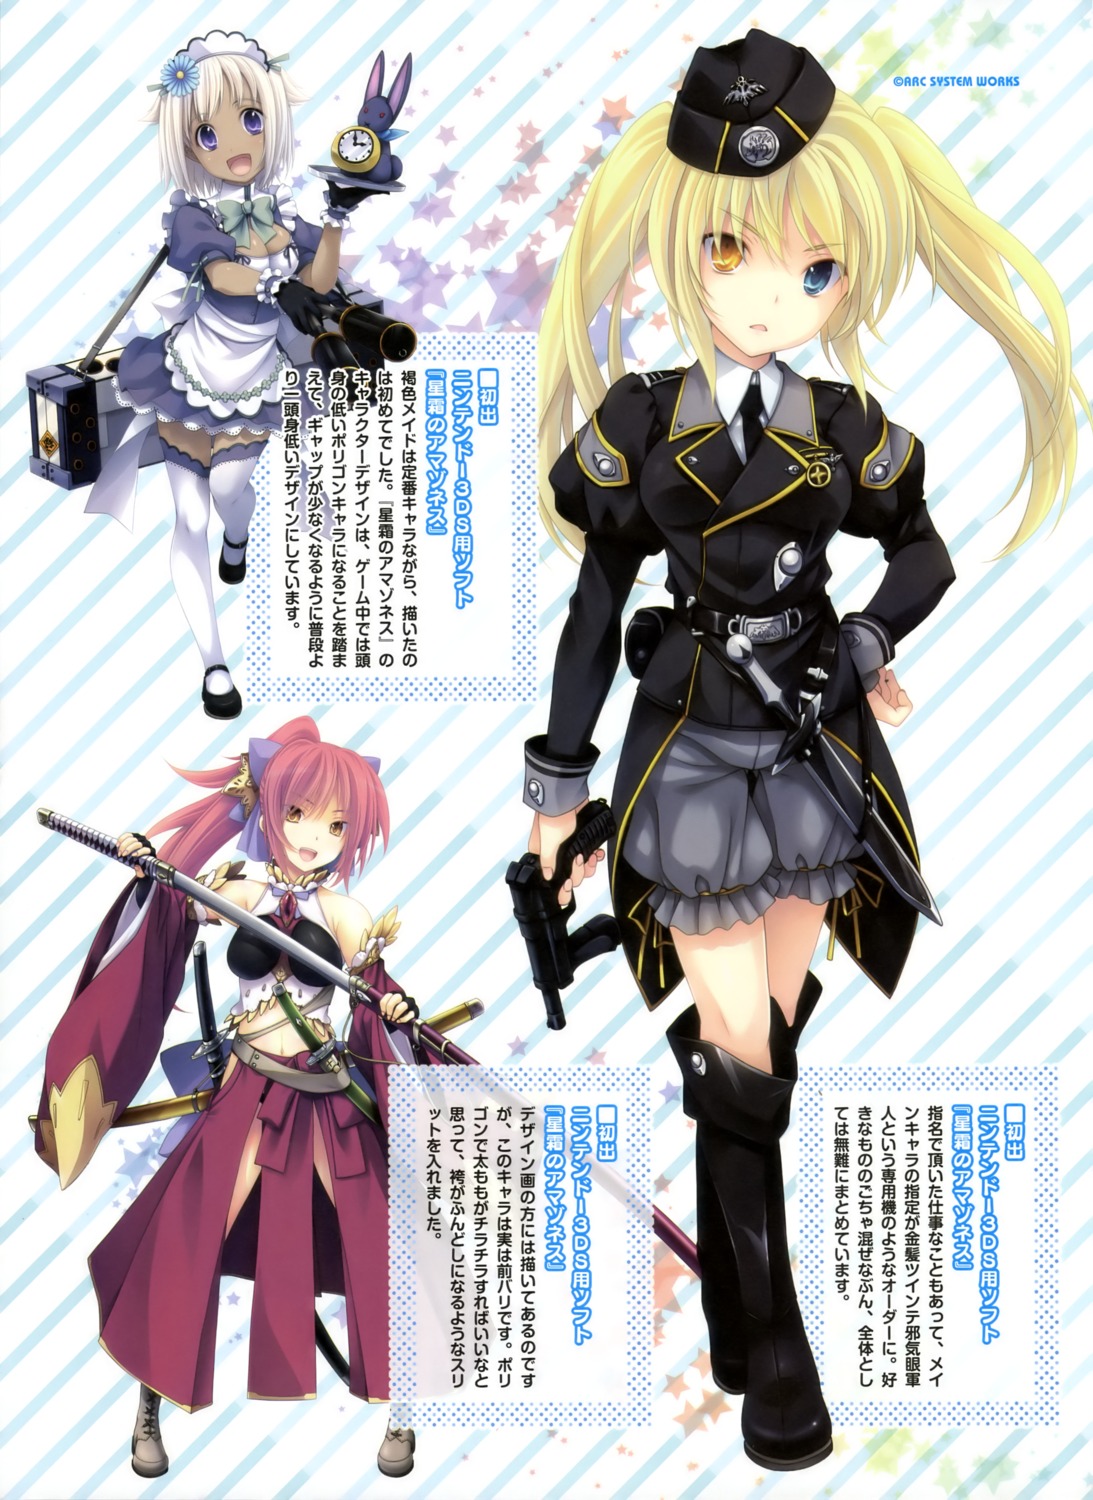 armor bloomers cleavage gun heterochromia maid miyama-zero sword uniform